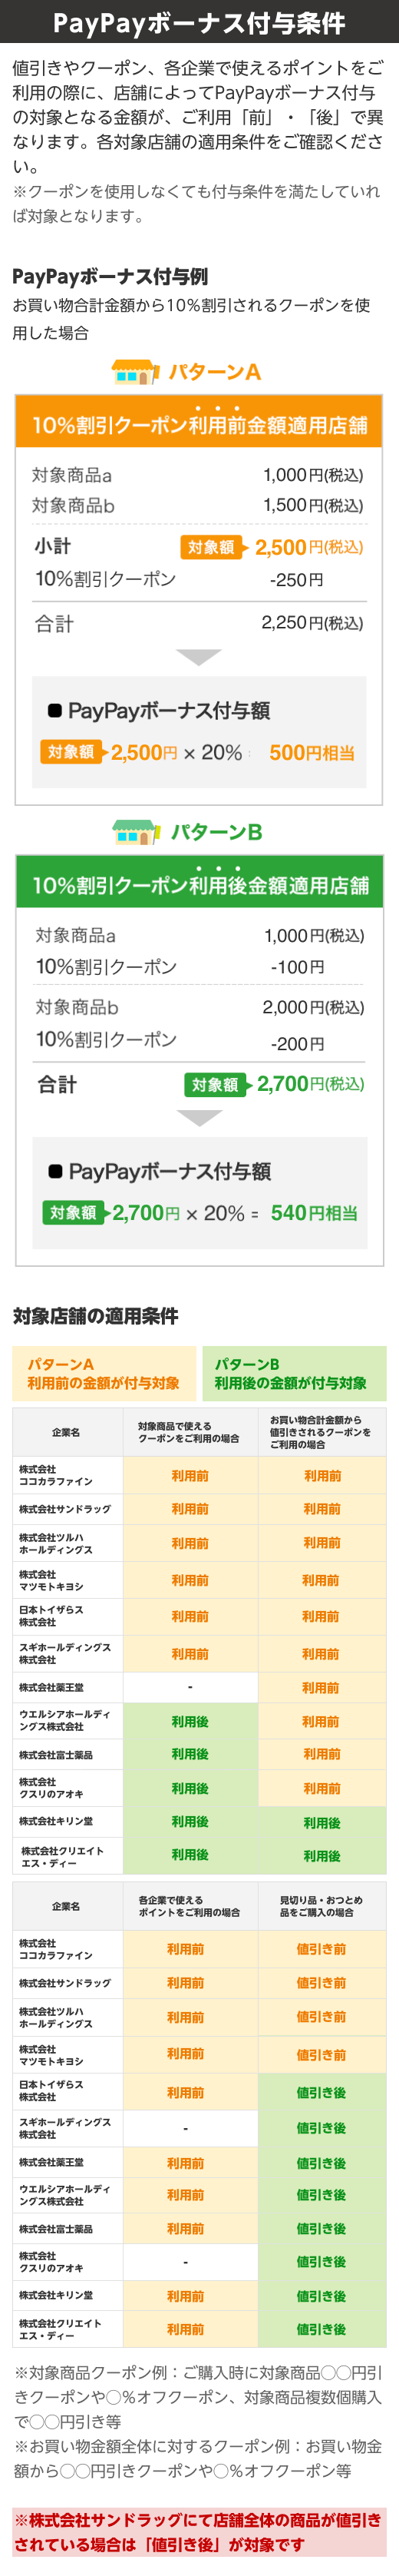 PayPayボーナス付与条件